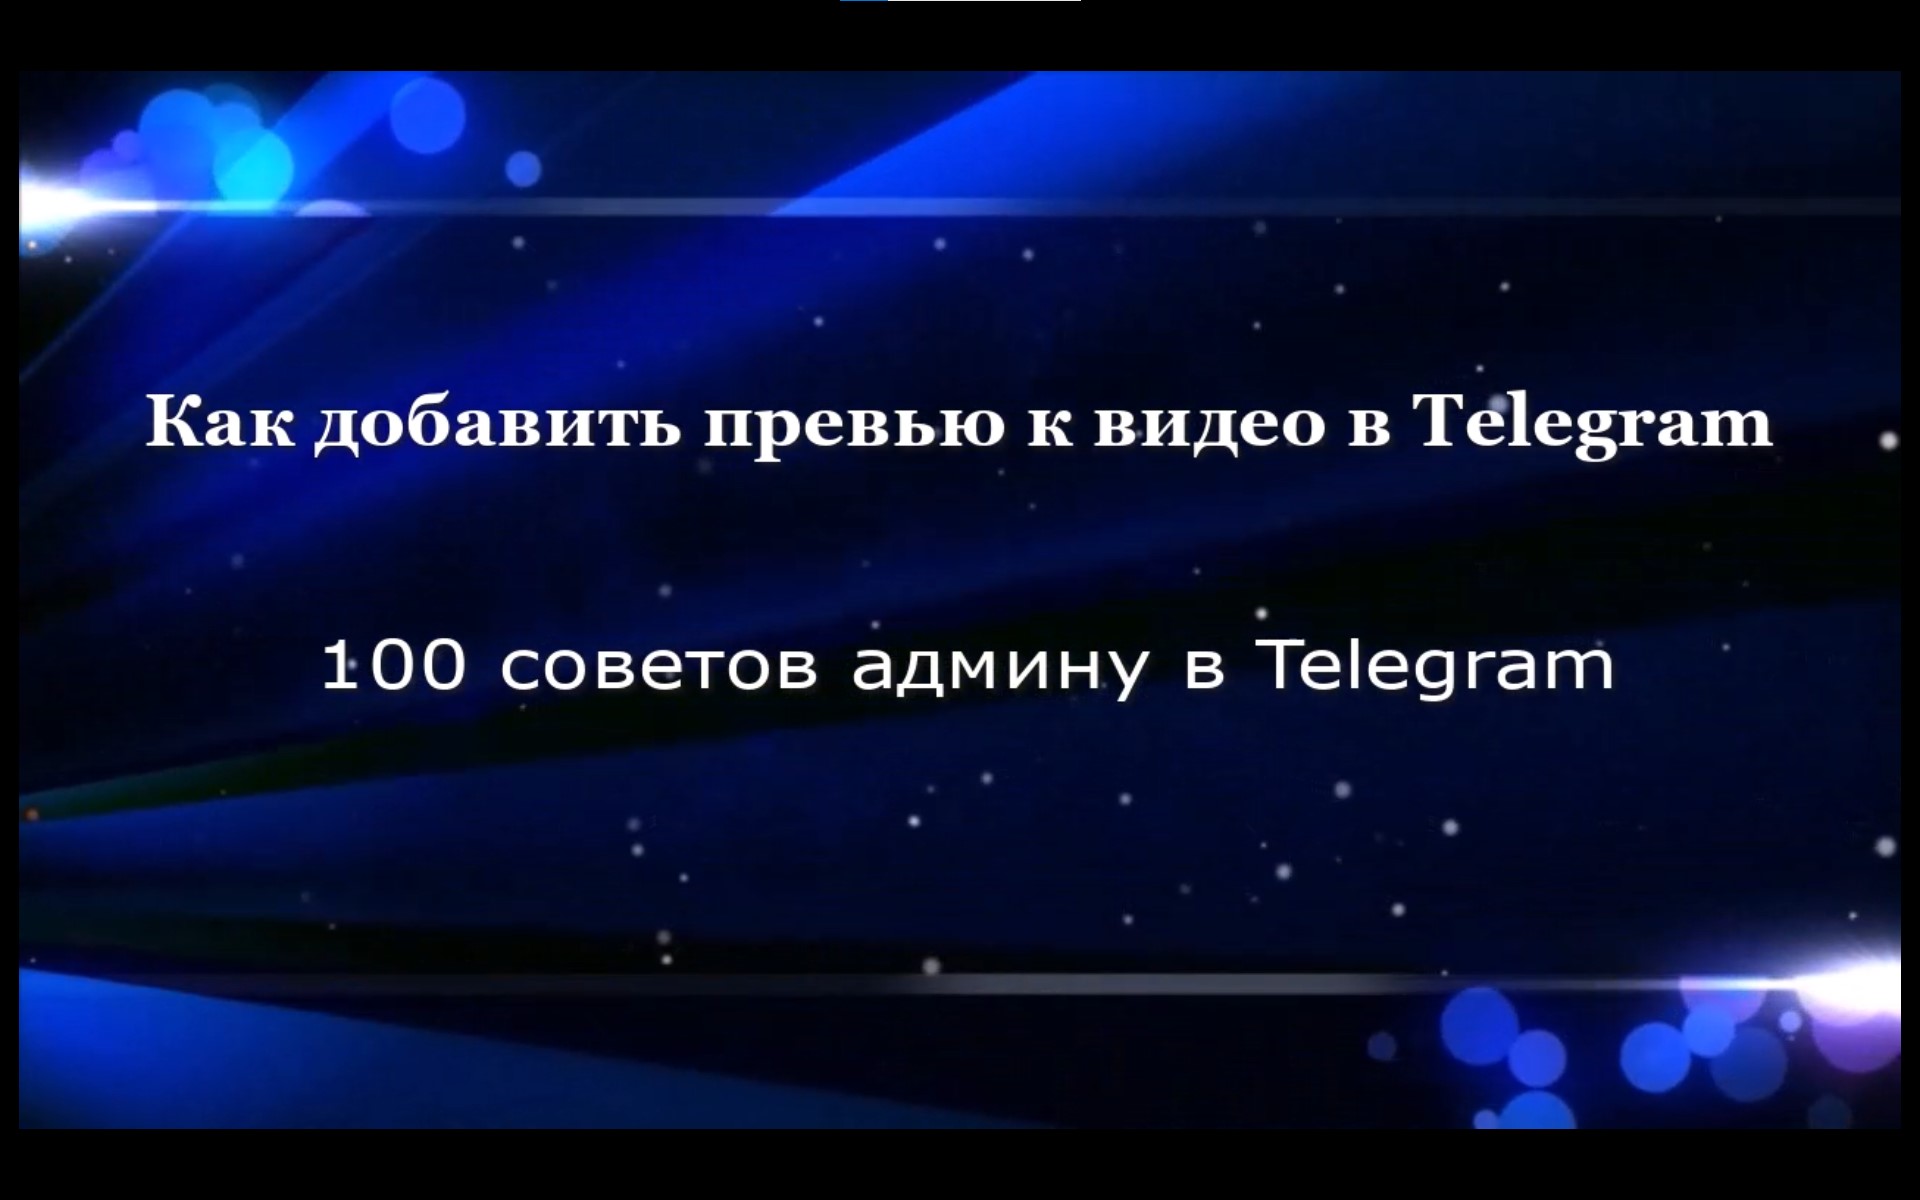 Смотреть видео из телеграмма онлайн (120) фото